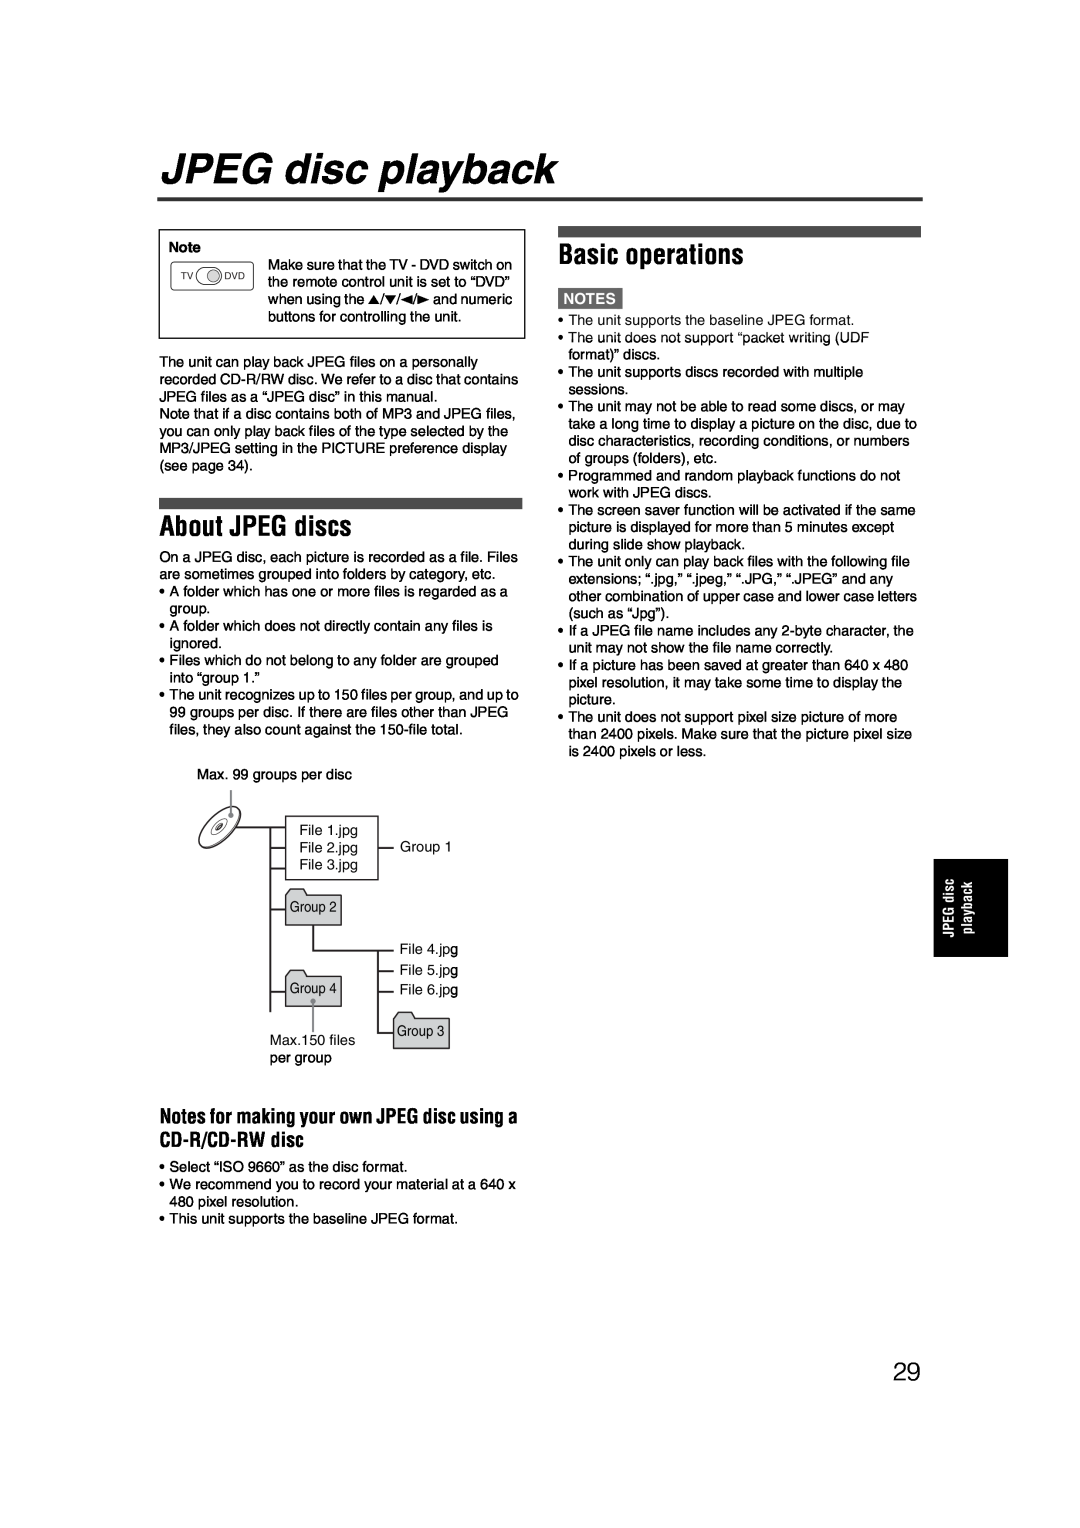 JVC LET0227-003A manual JPEG disc playback, About JPEG discs, Basic operations 